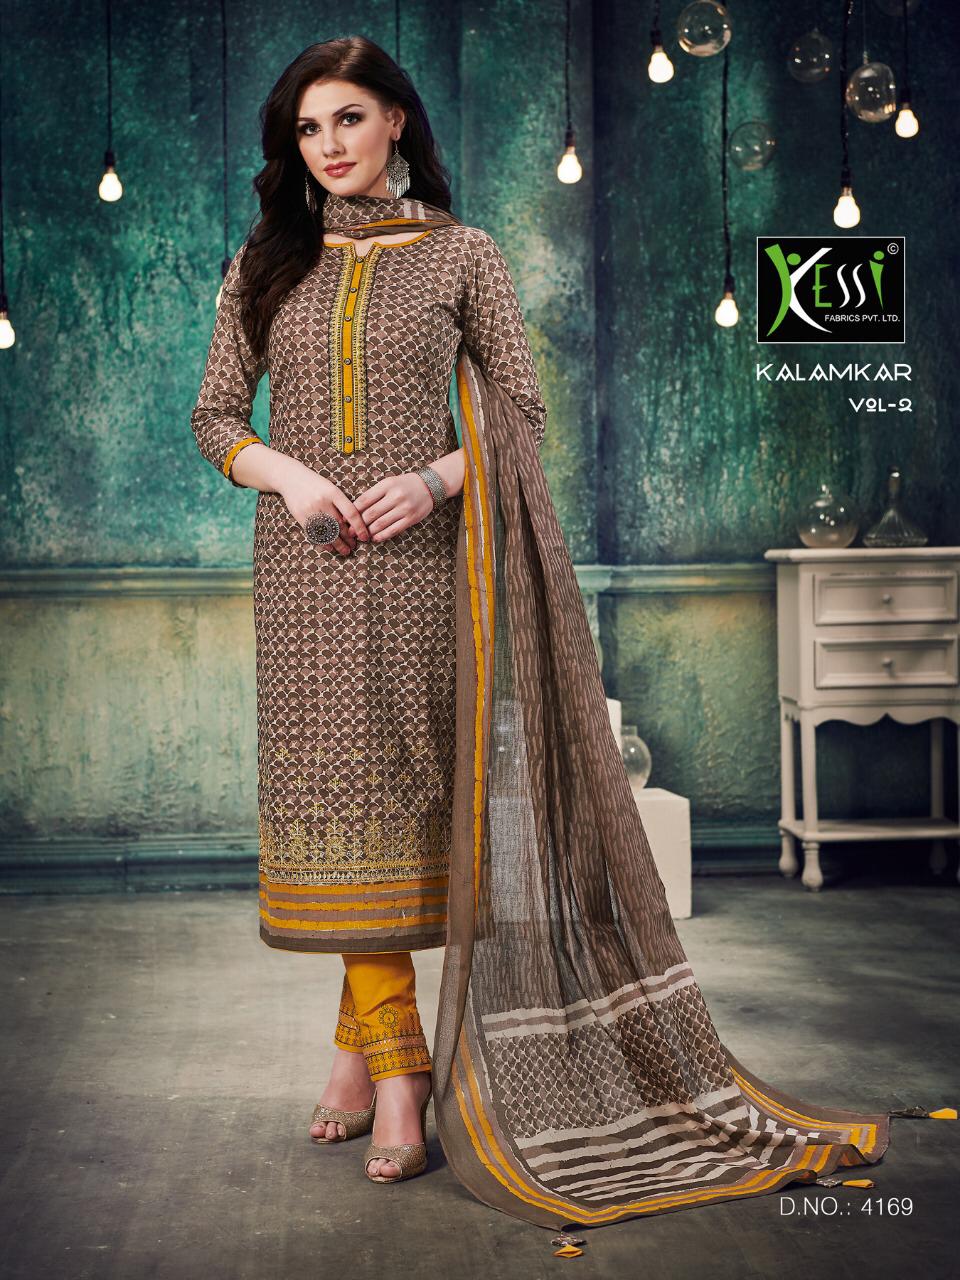 kessi kalamkar vol 2 colorful fancy collection of salwaar suits at reasonable rate